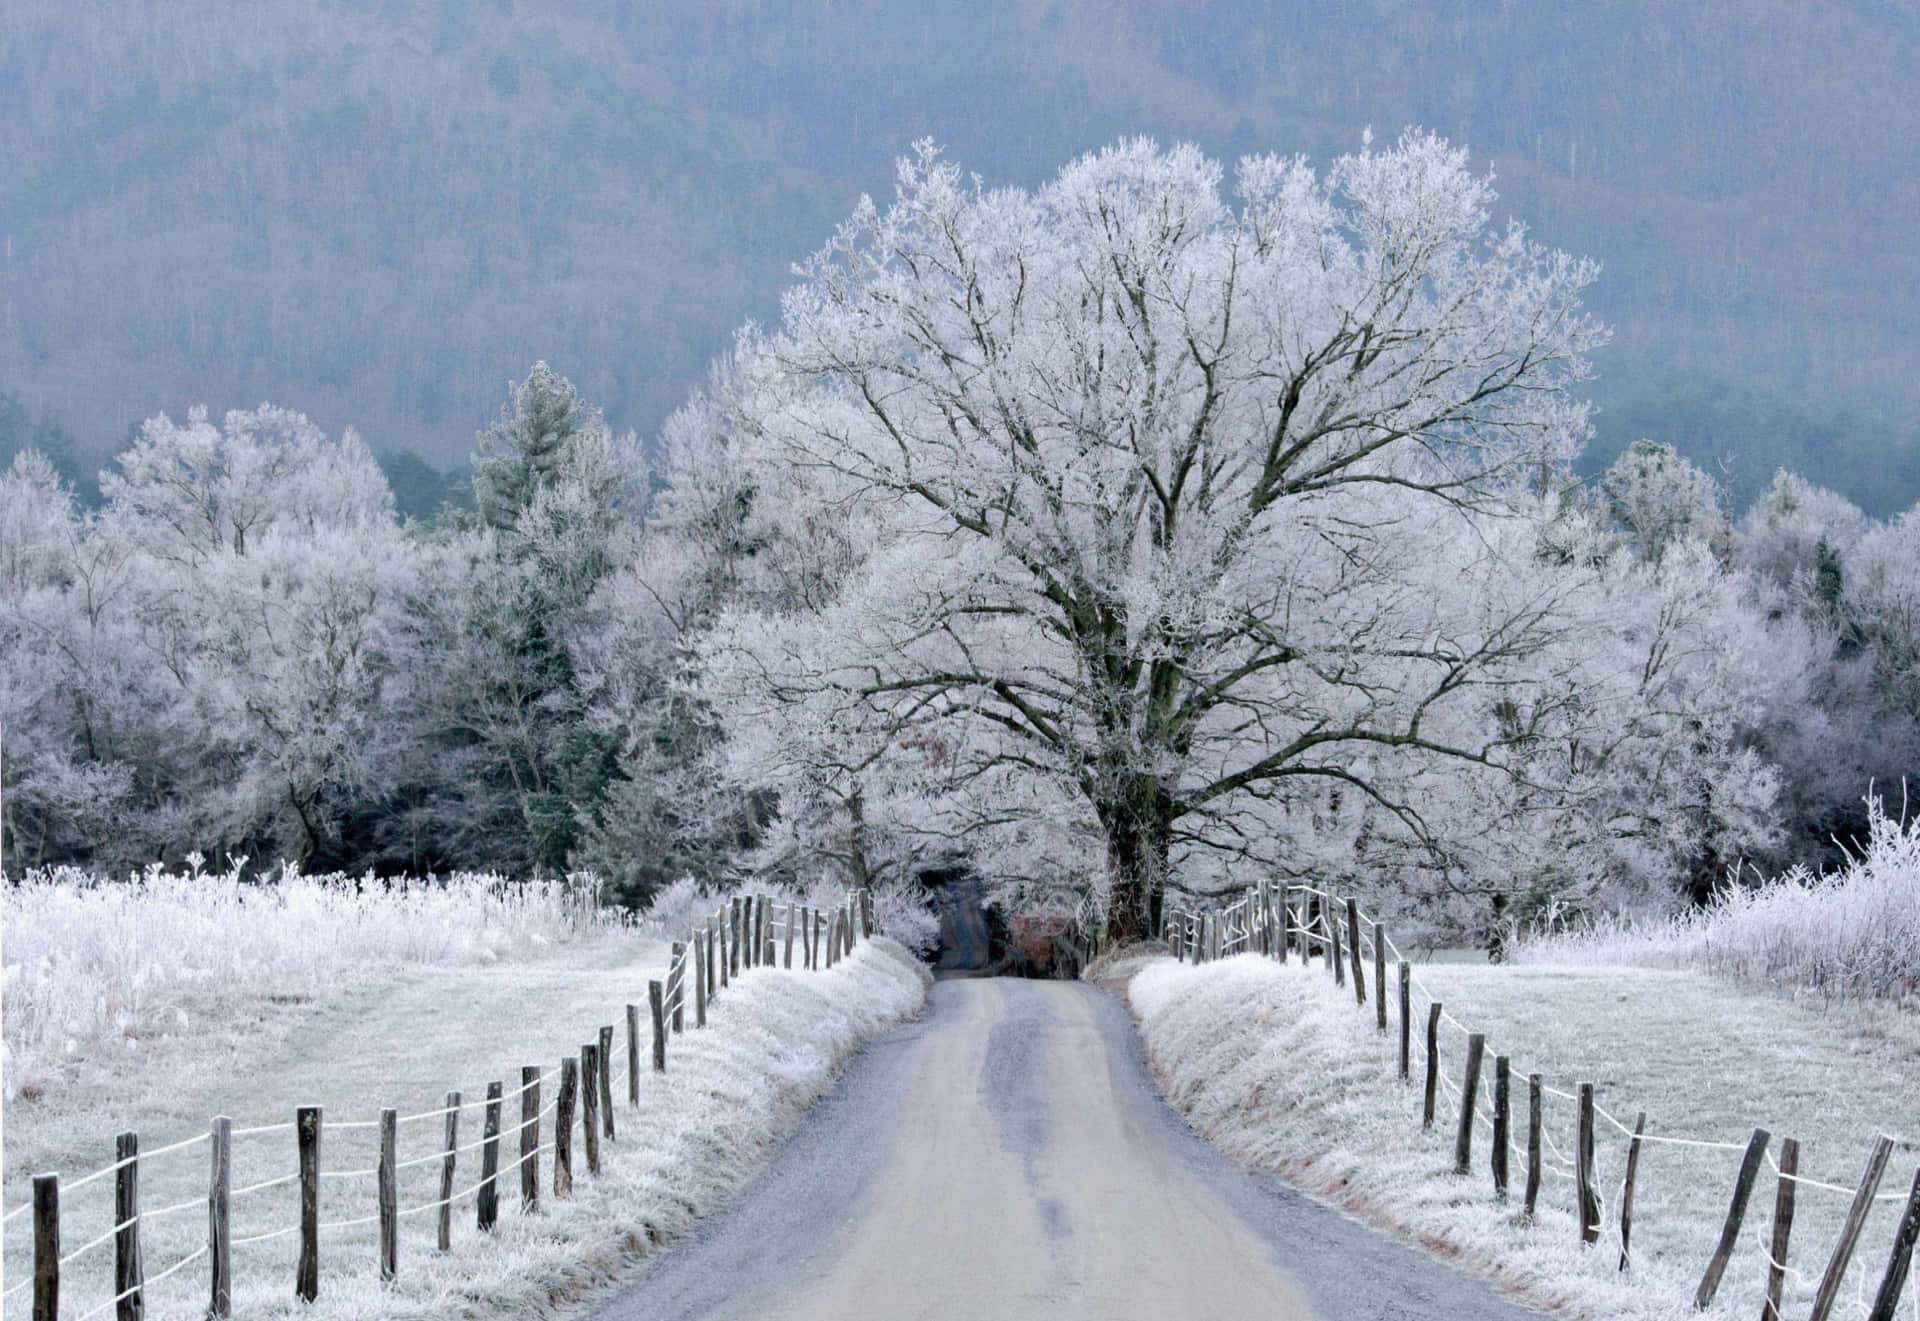 A narrow path through a winter wonderland